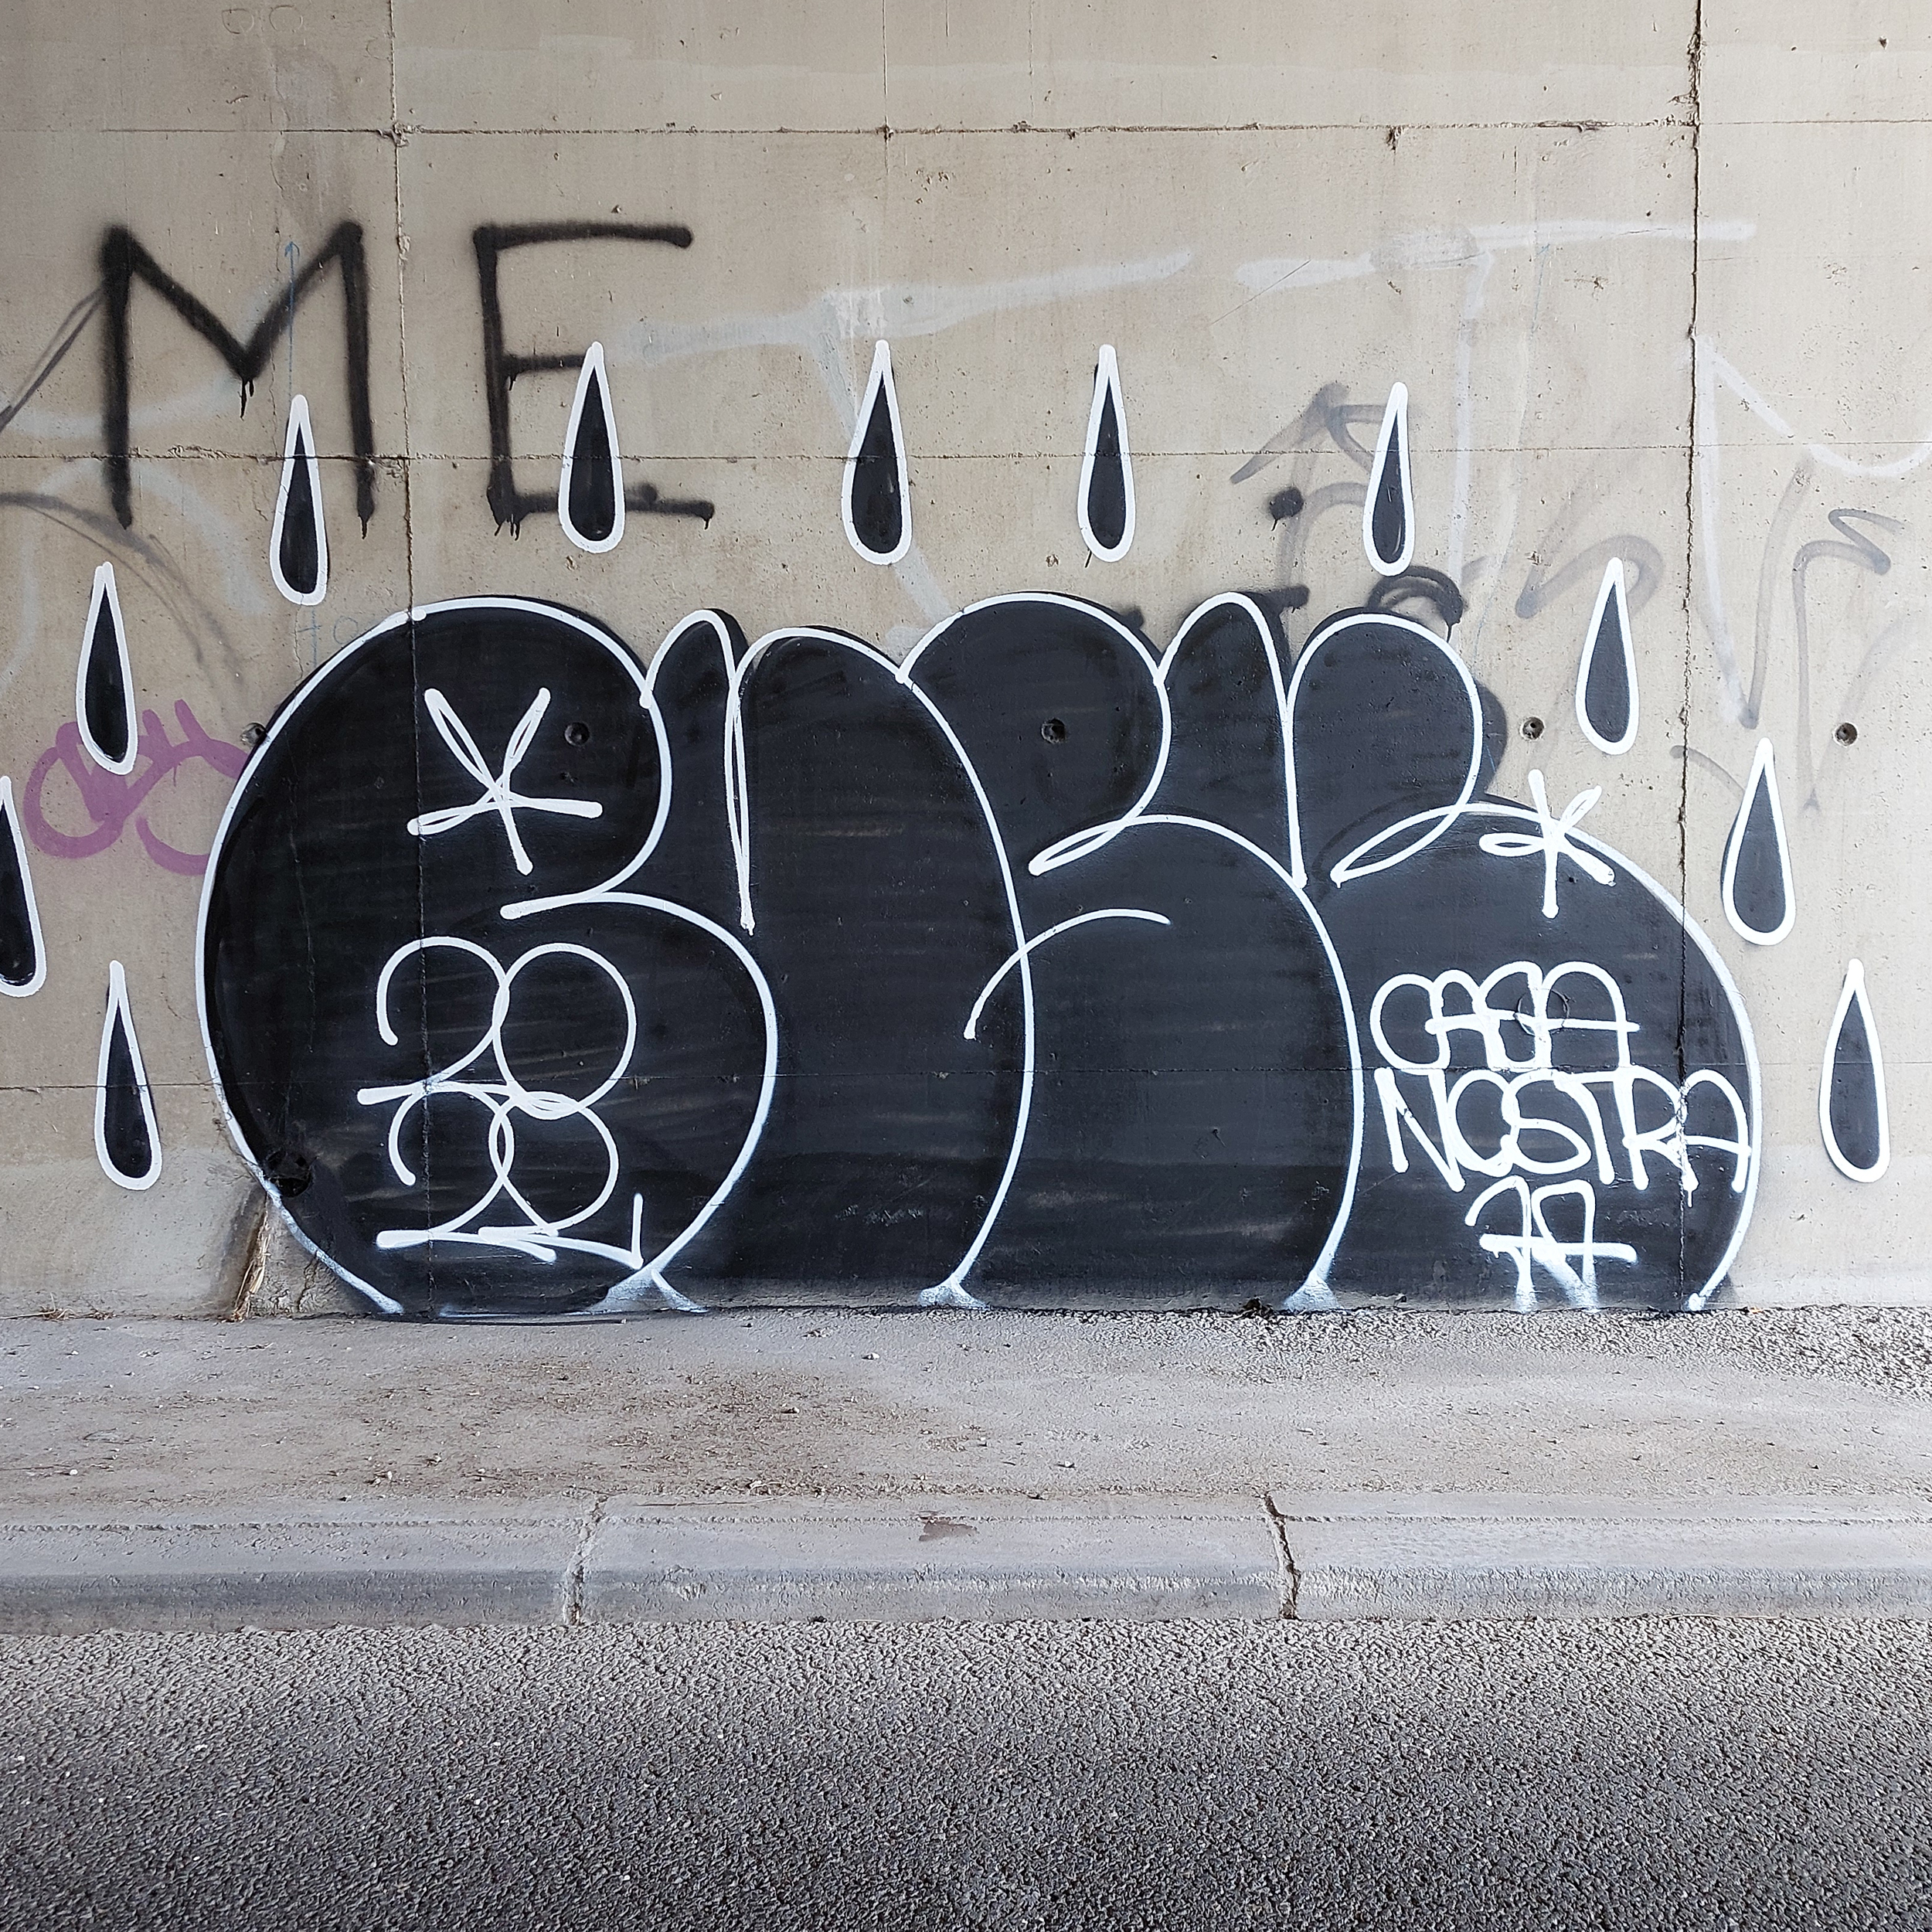 Black Bush 77 - street art - graffiti - painter